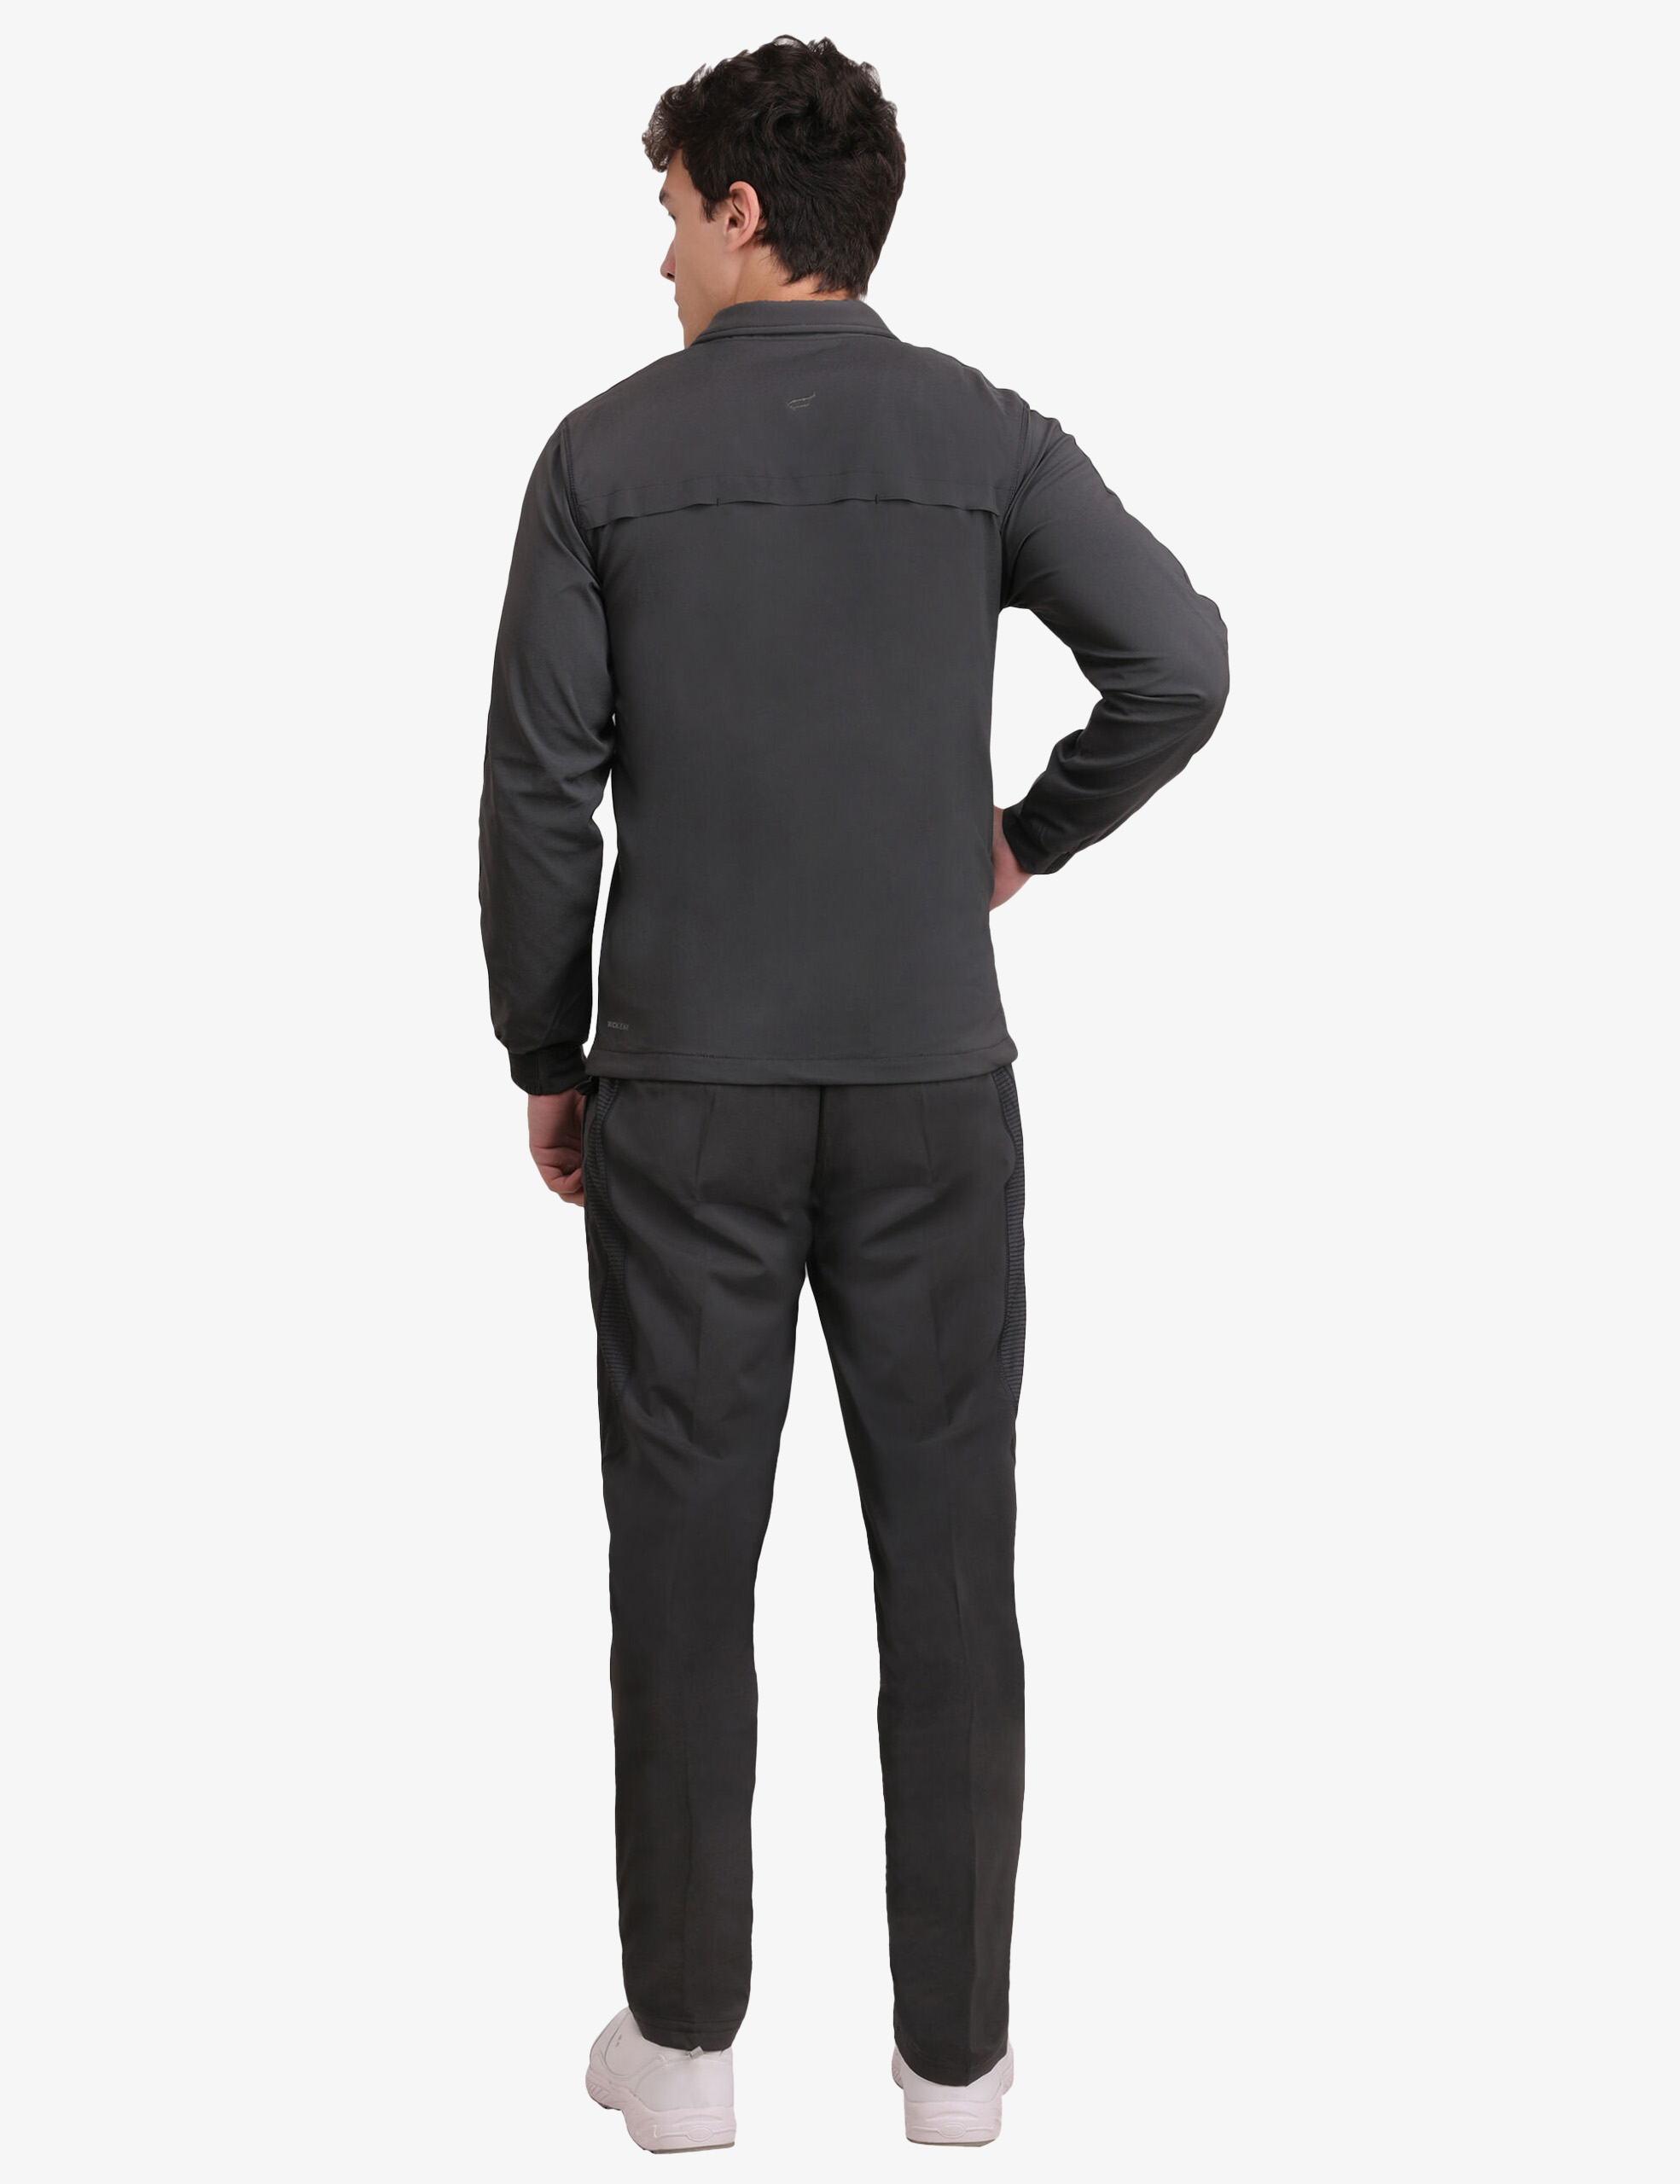 ASI Prime Dark Grey Track Suit for Men